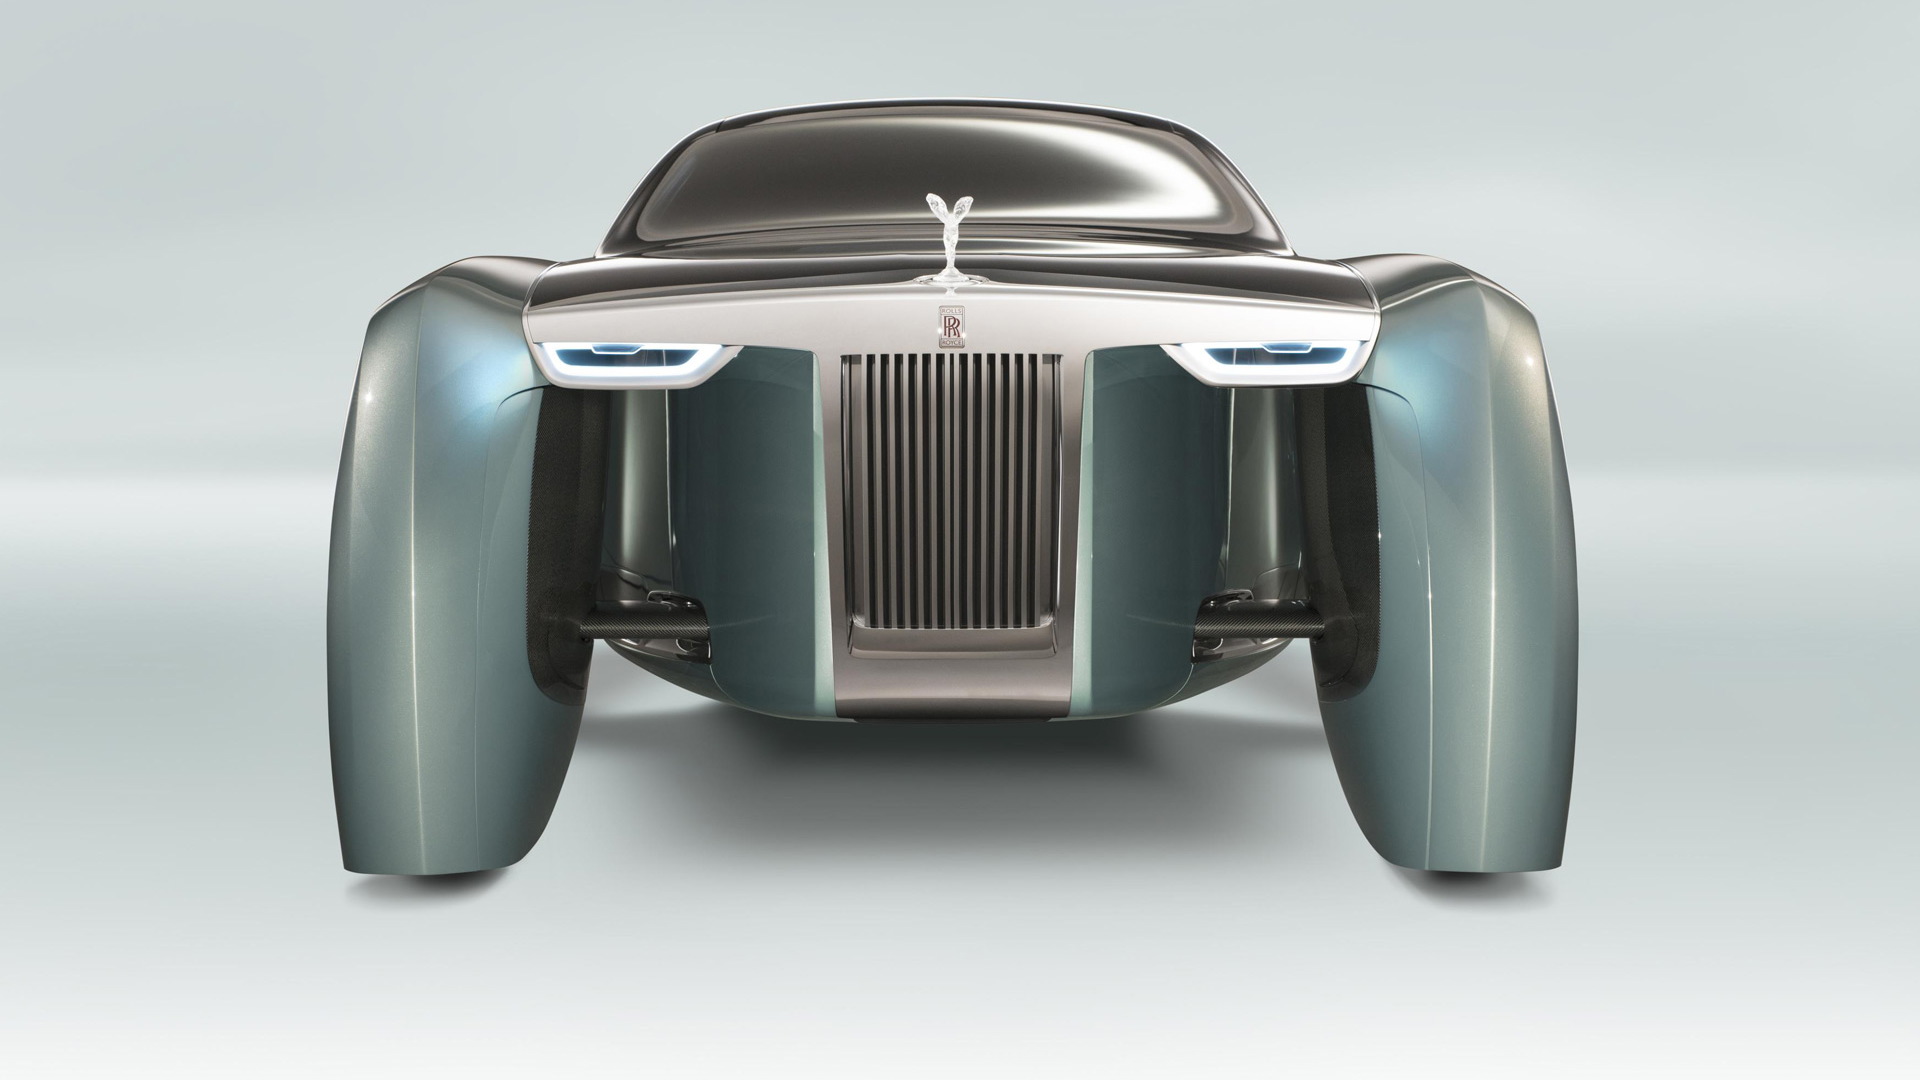 Rolls-Royce Vision Next 100 (103EX) concept